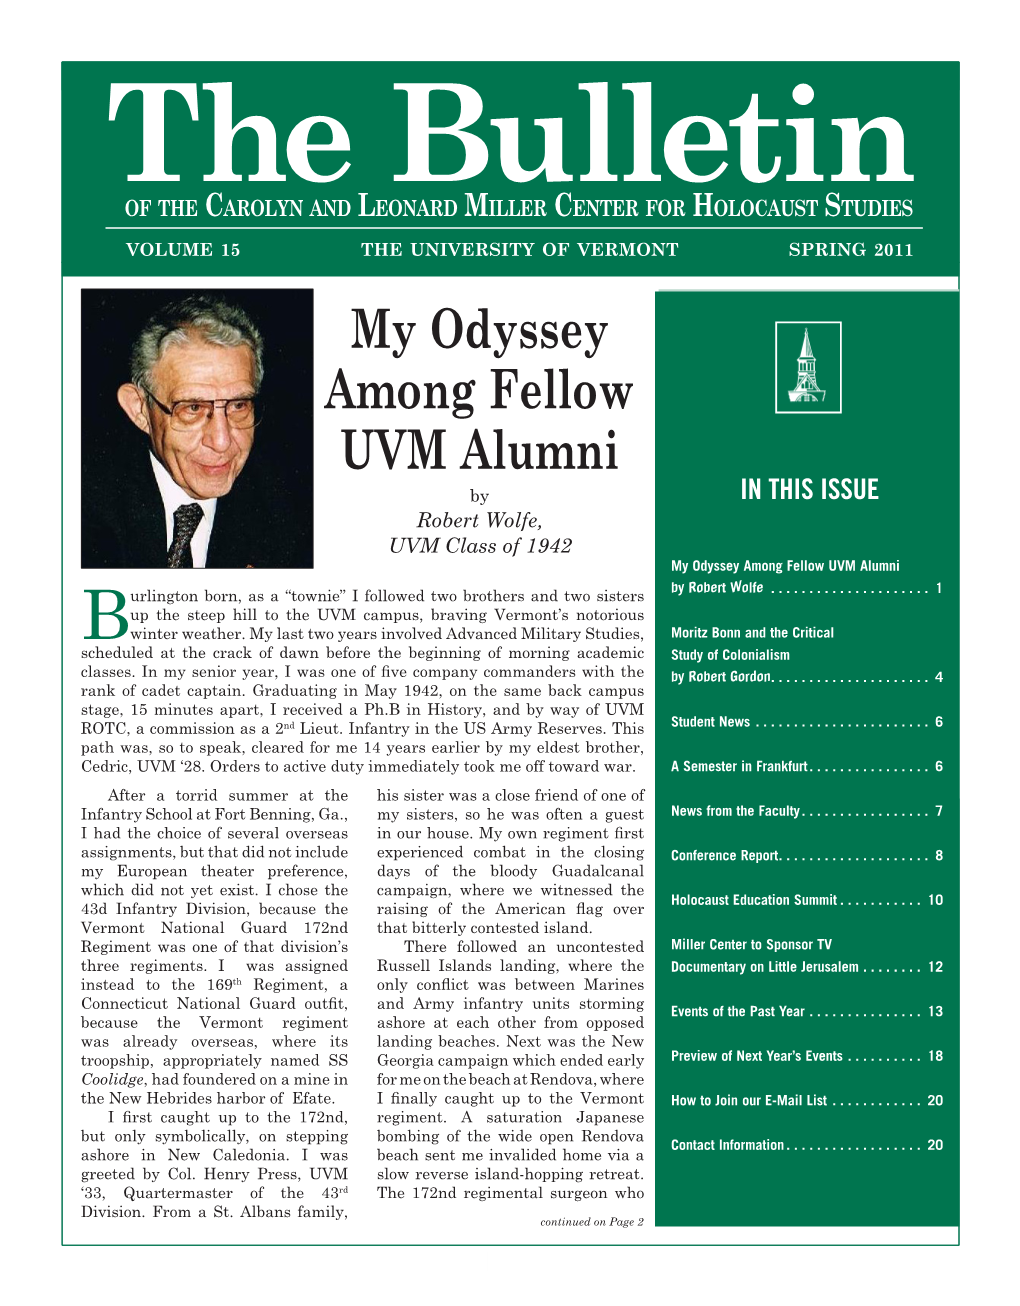 My Odyssey Among Fellow UVM Alumni